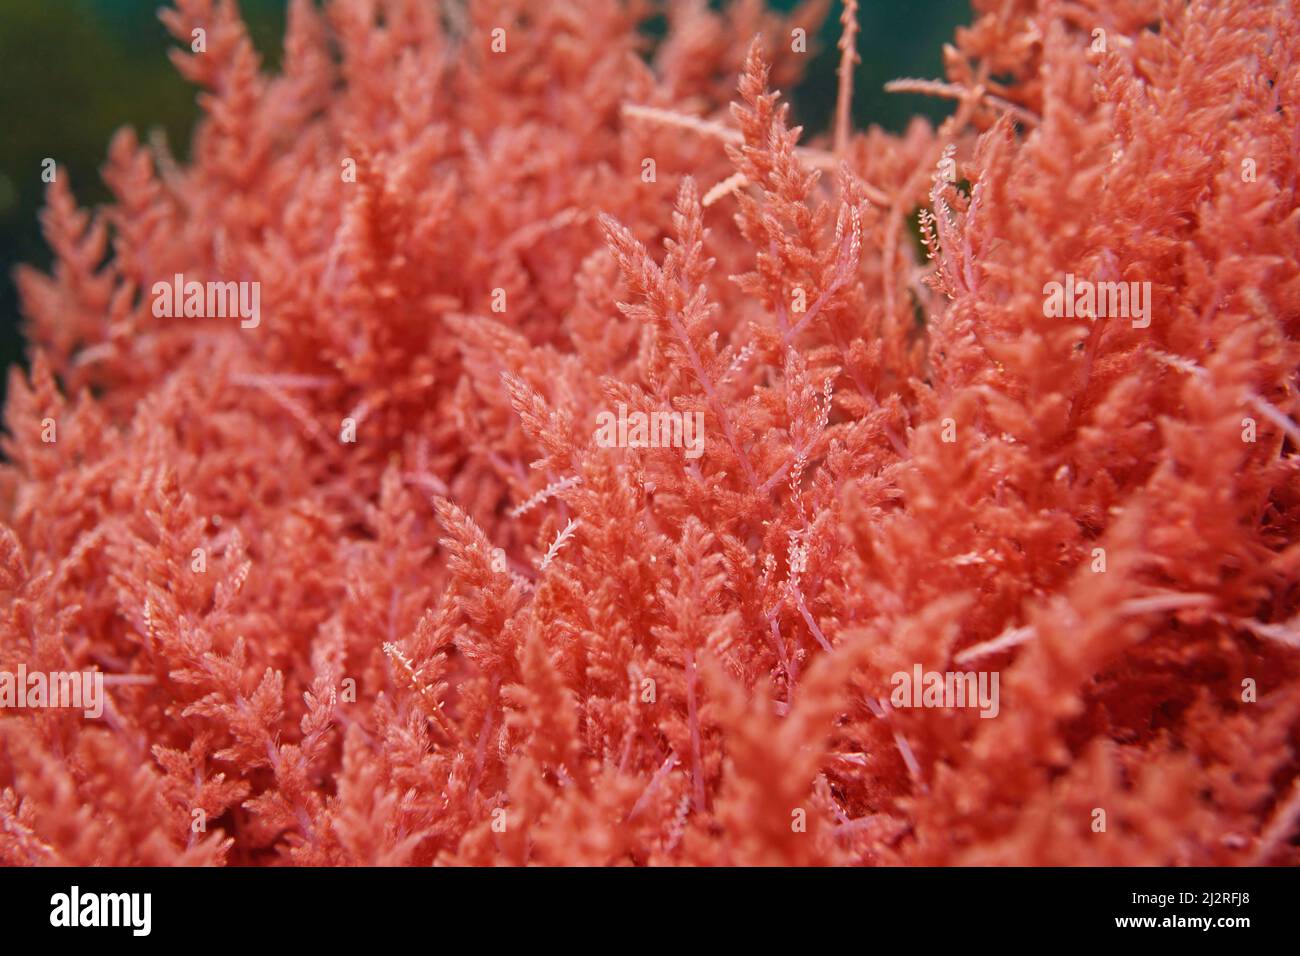 Red alga Harpoon weed, Asparagopsis armata, close-up, underwater in the Atlantic ocean, Spain Stock Photo